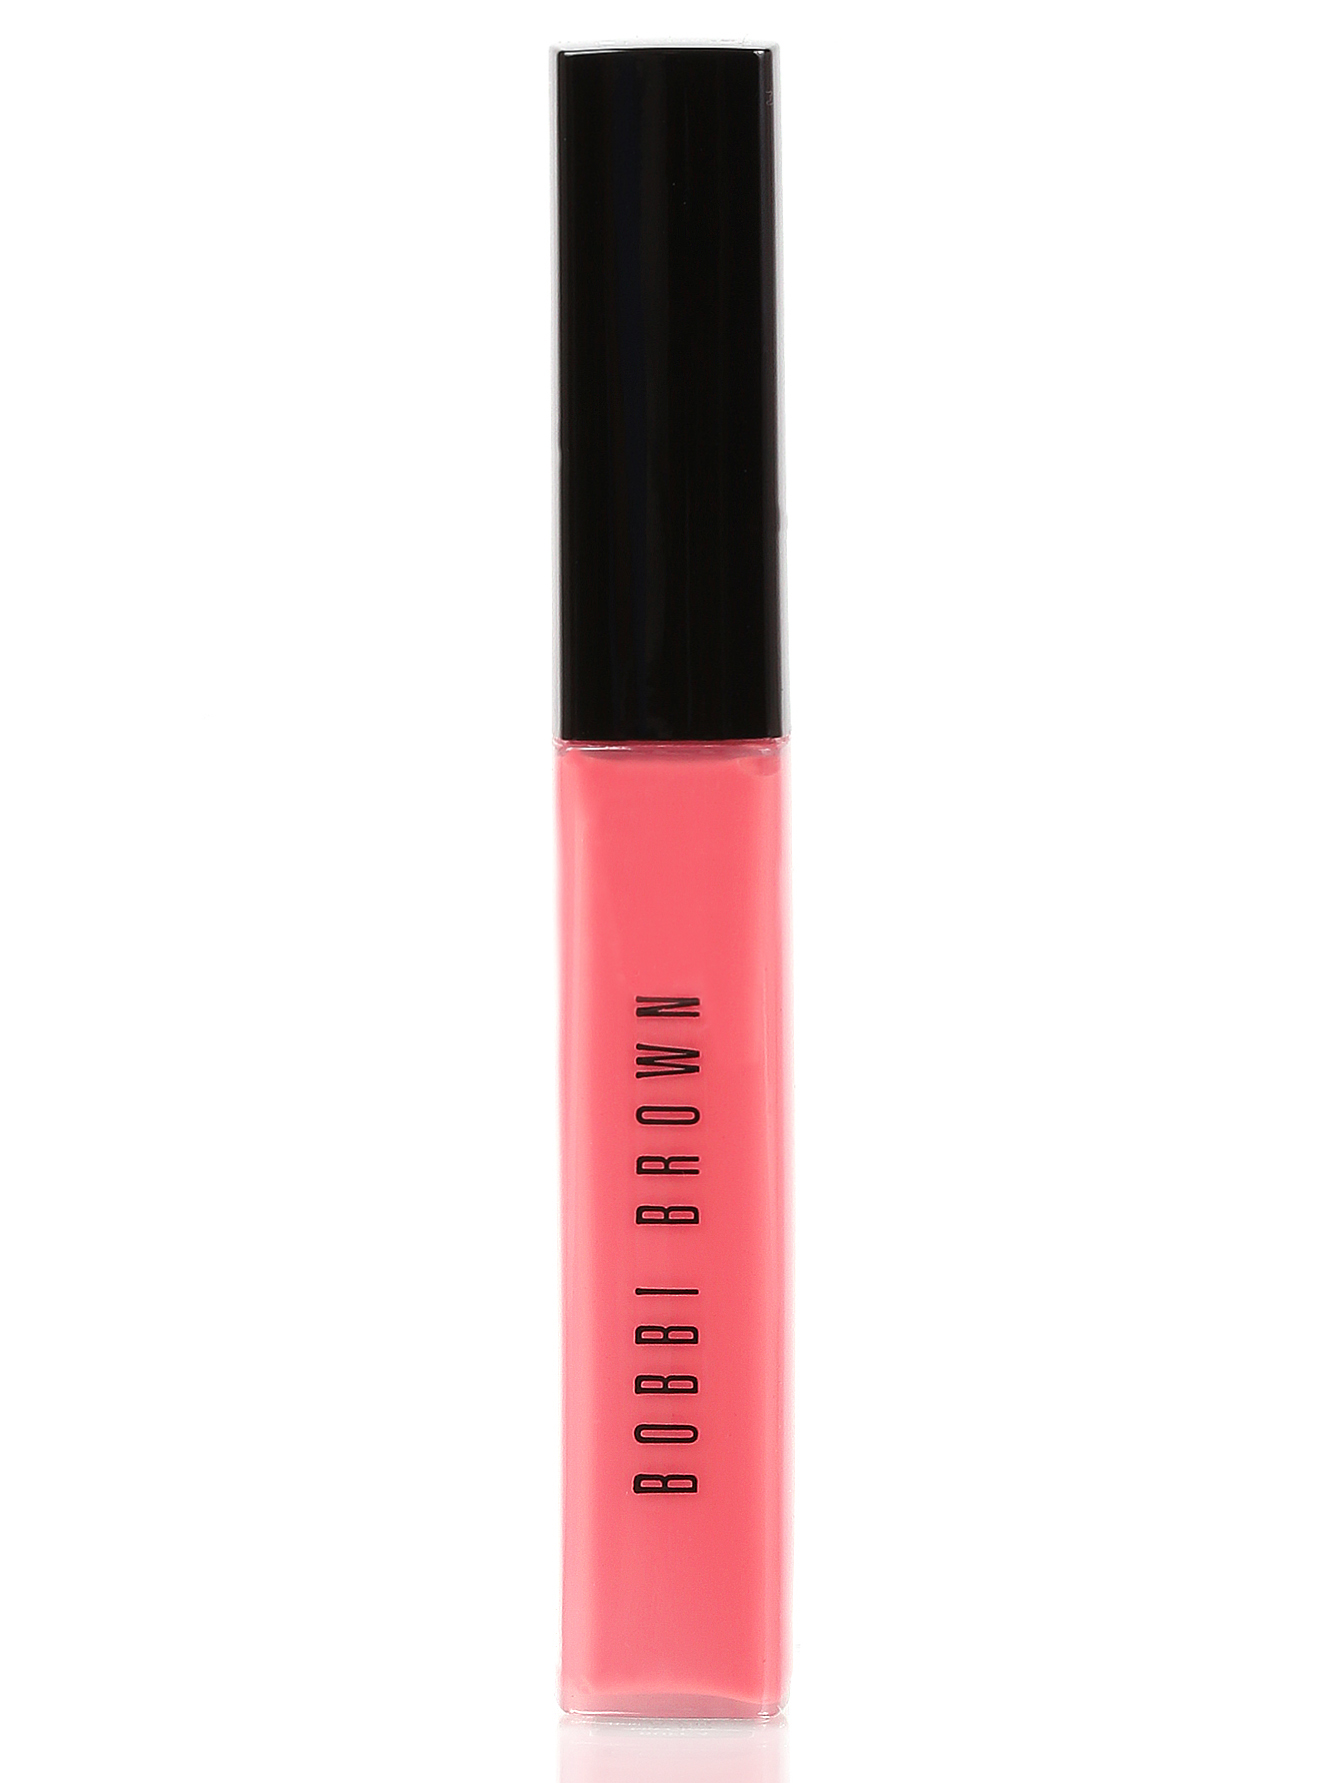 Блеск для губ - Bright Pink, Lip Gloss - Общий вид